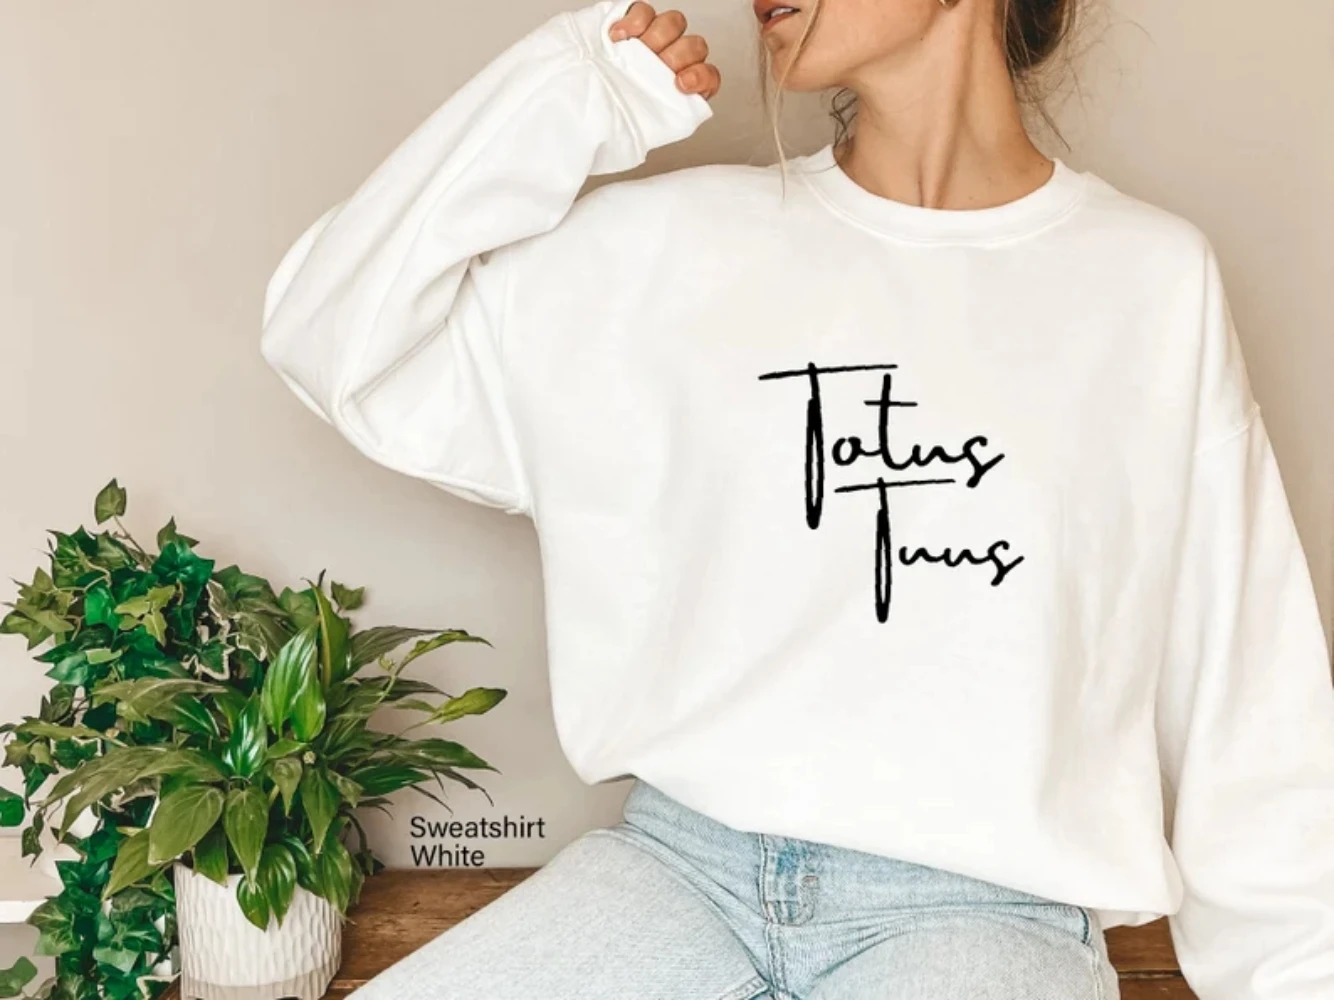 Minimalist Catholic Sweatshirt Totus Tuus Christian Bible Verse Religious Shirt Trendy Faith Pullover Top Winter Clothes Women